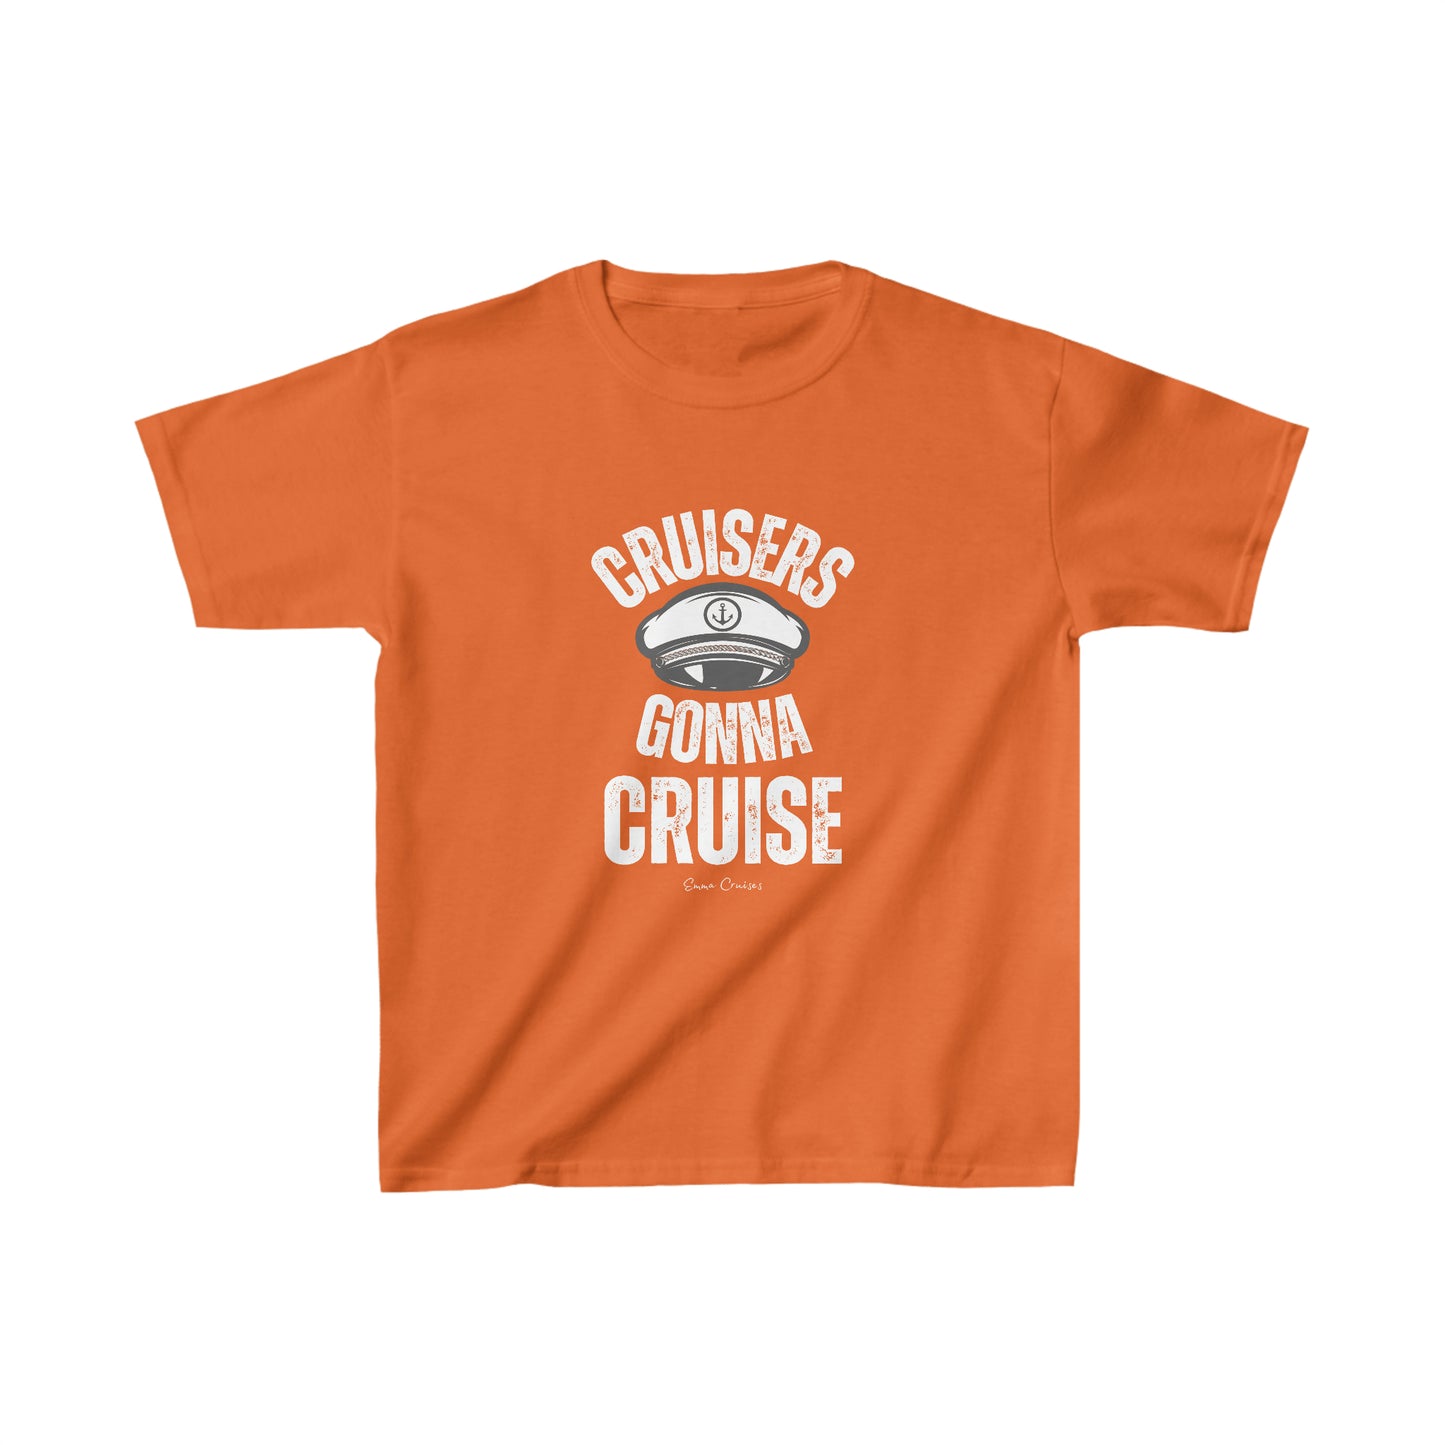 Cruisers Gonna Cruise - Kids UNISEX T-Shirt